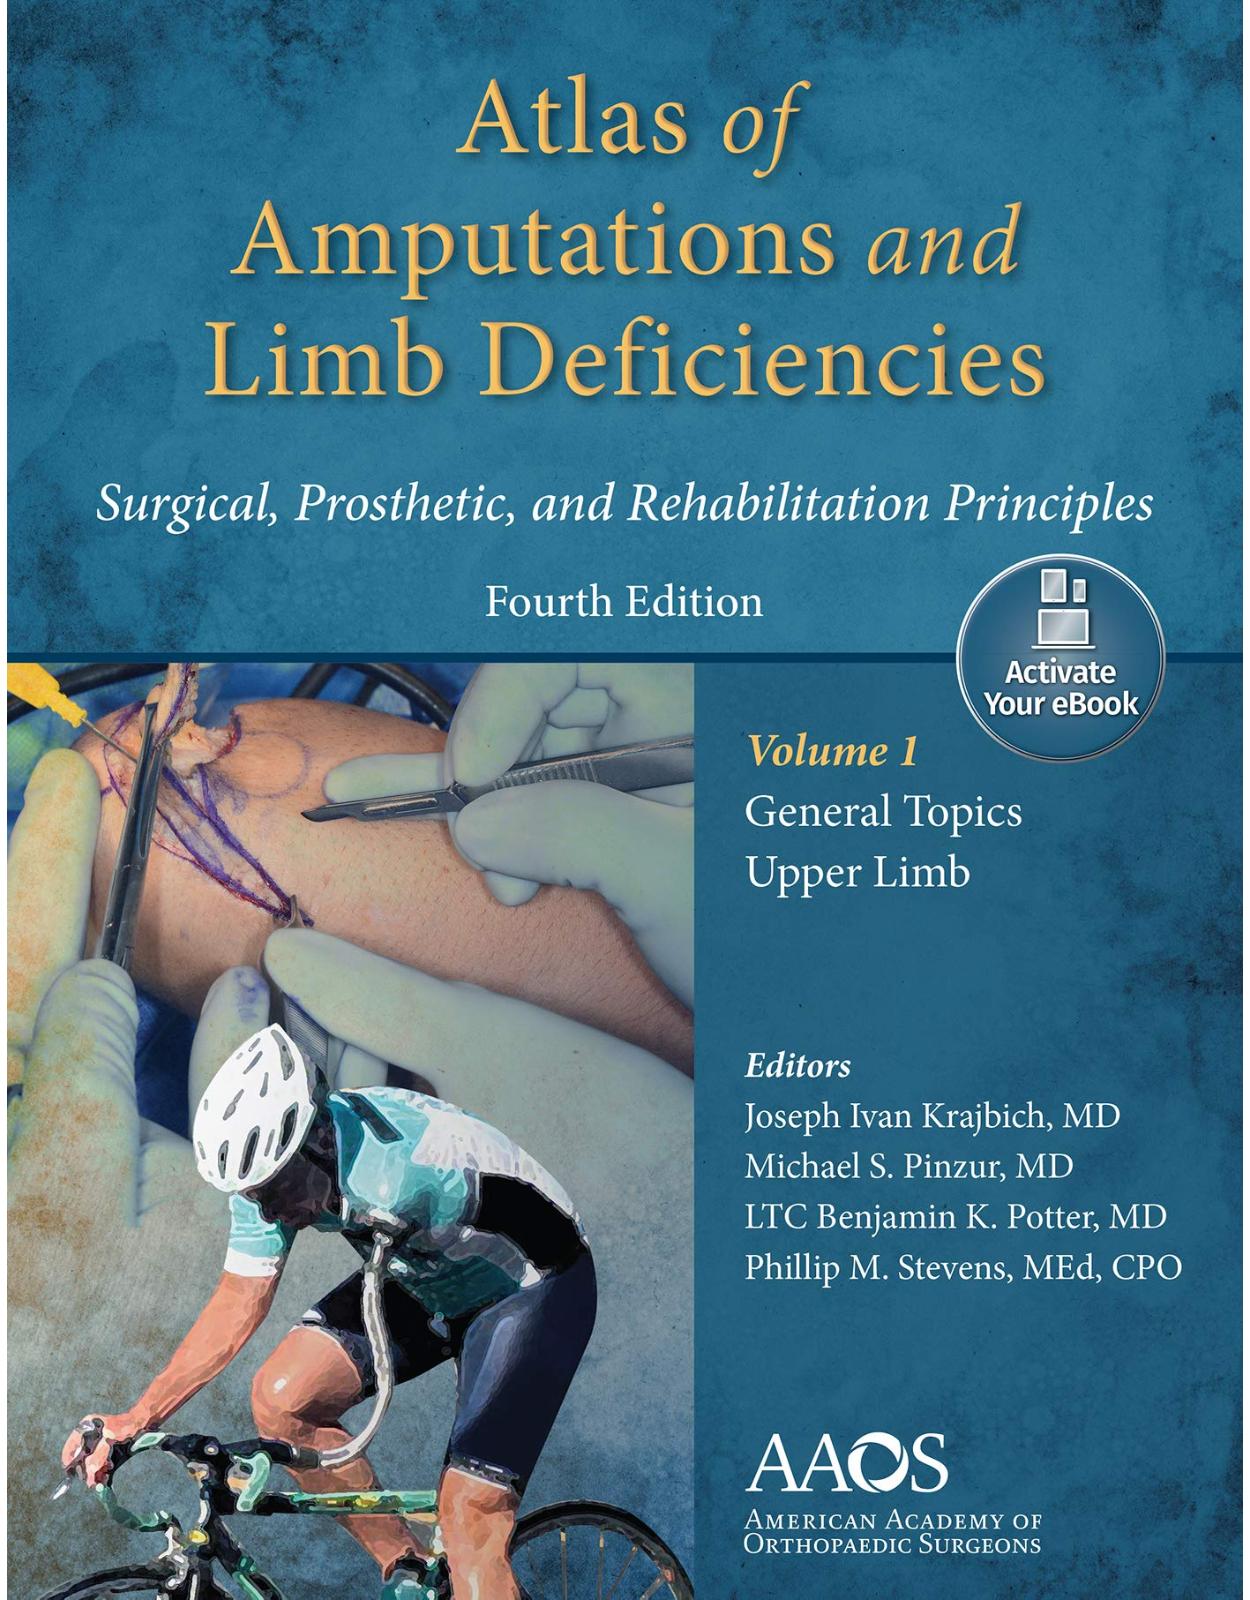 Atlas of Amputations & Limb Deficiencies, 4th edition: Print with Multimedia